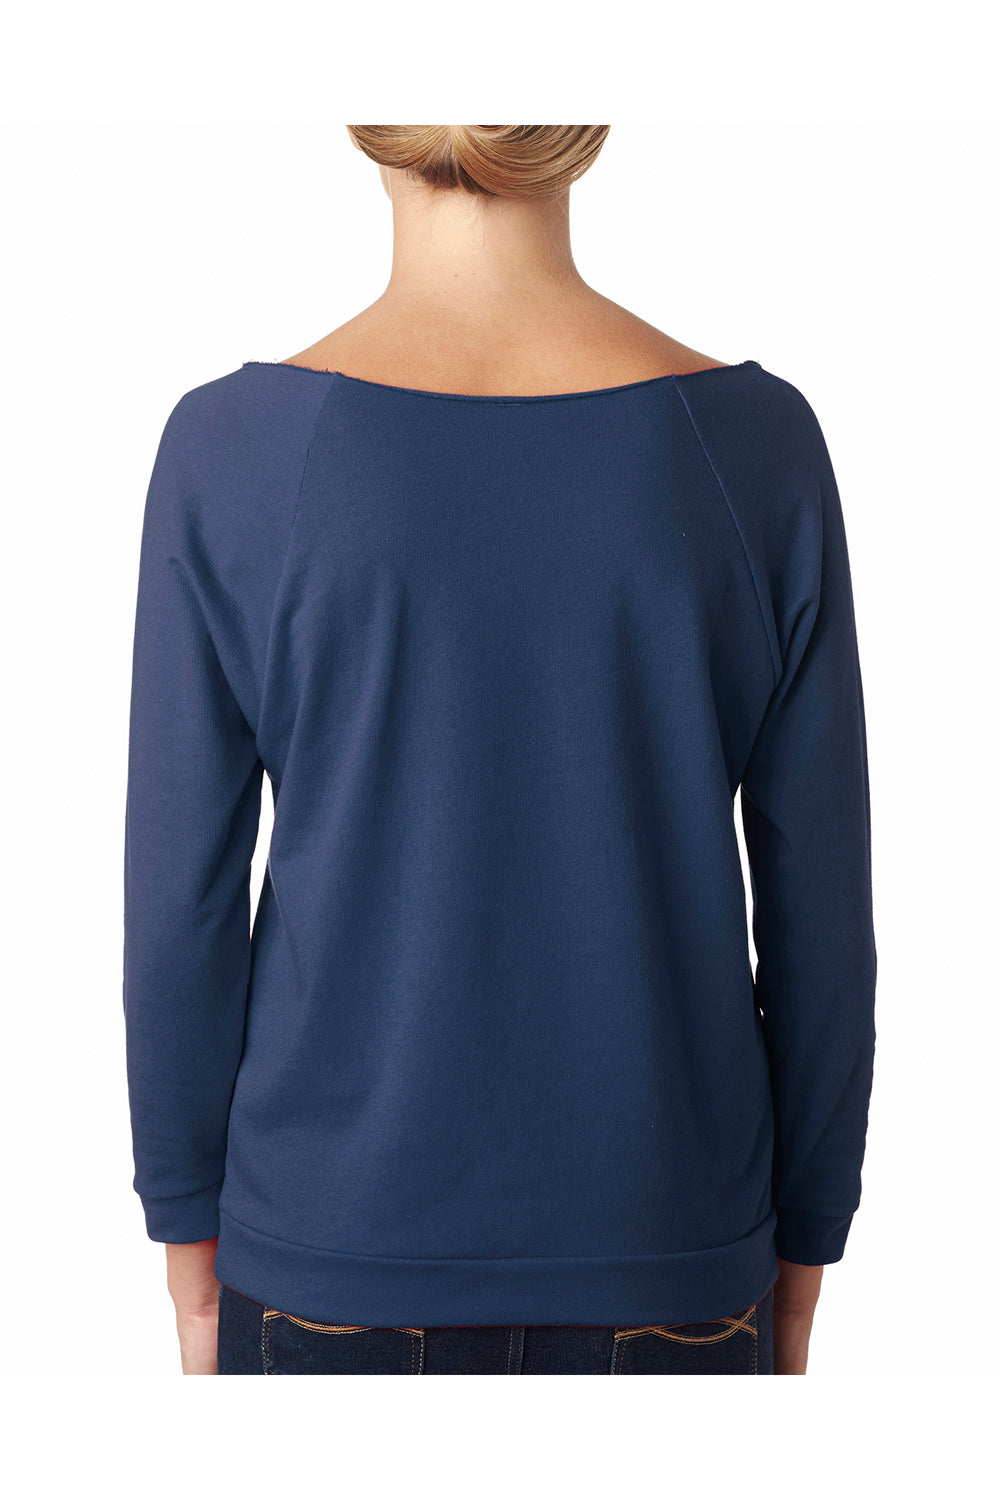 Next Level 6951 Womens French Terry 3/4 Sleeve Wide Neck T-Shirt Indigo Blue Back